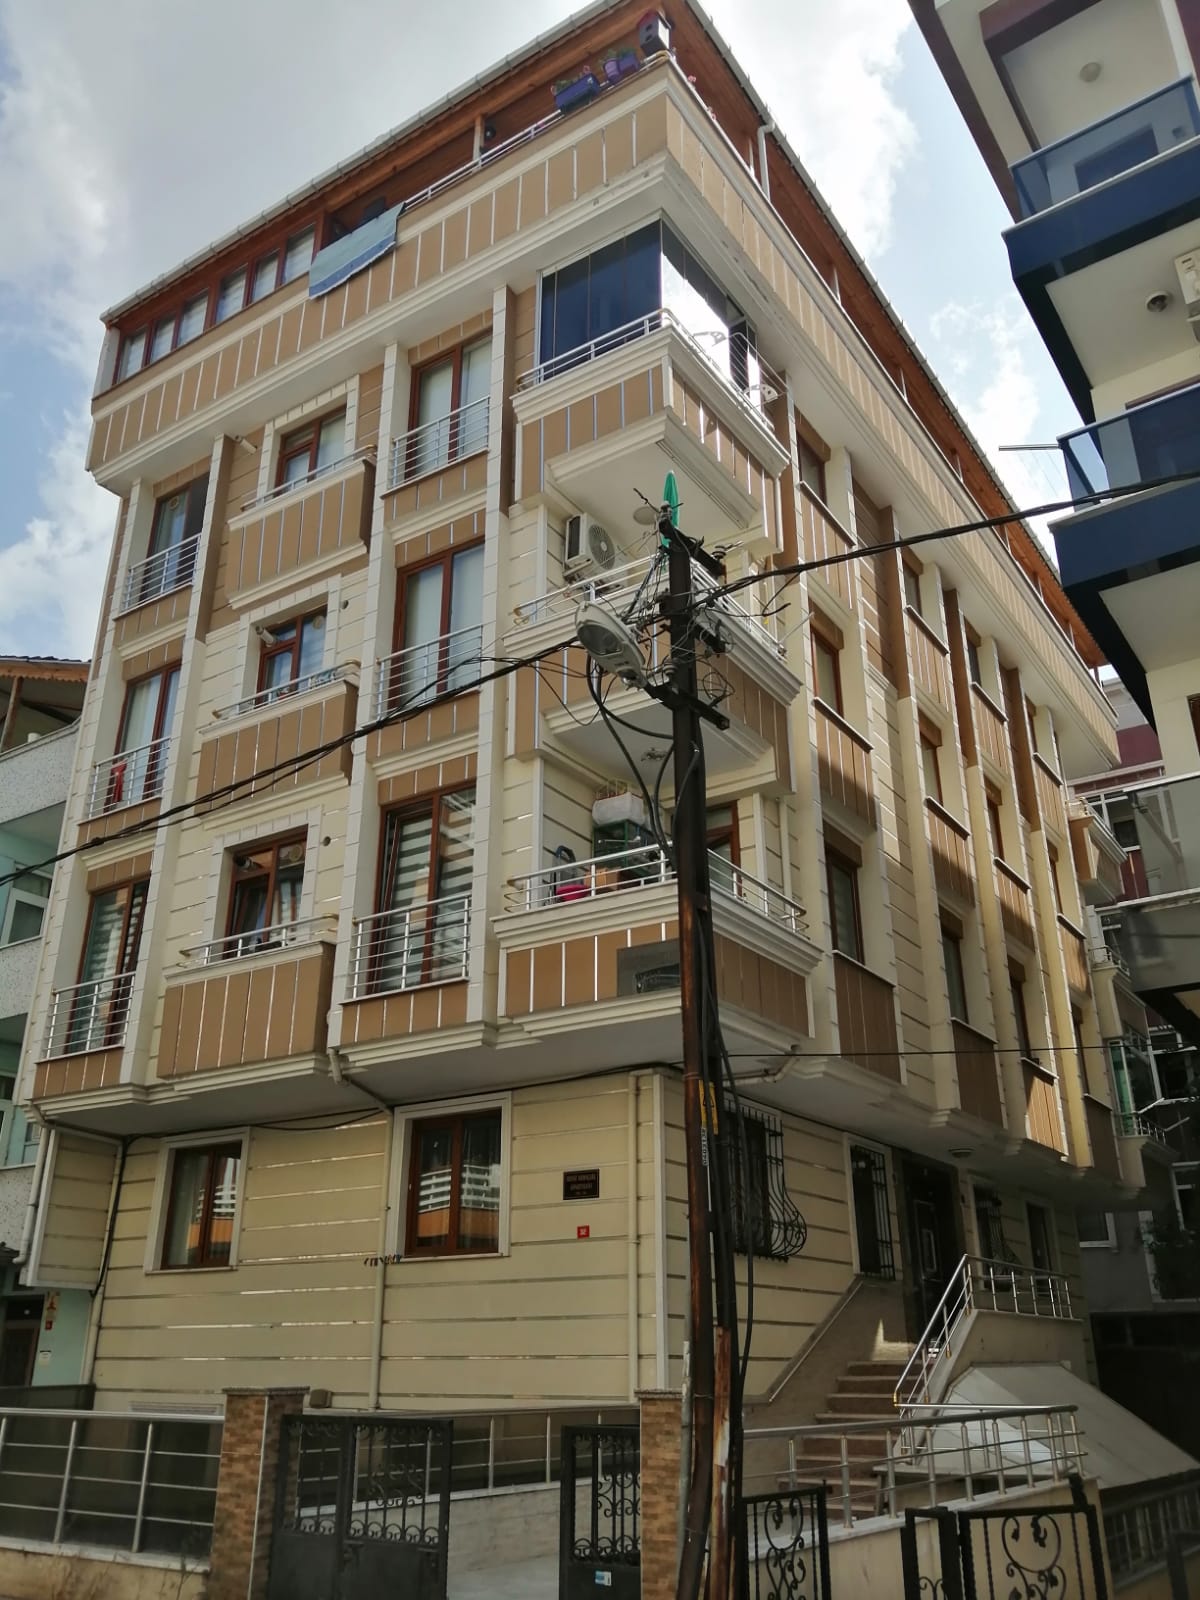 Flat for Land Project, Avcılar, Emekçi Street  -10  apartment